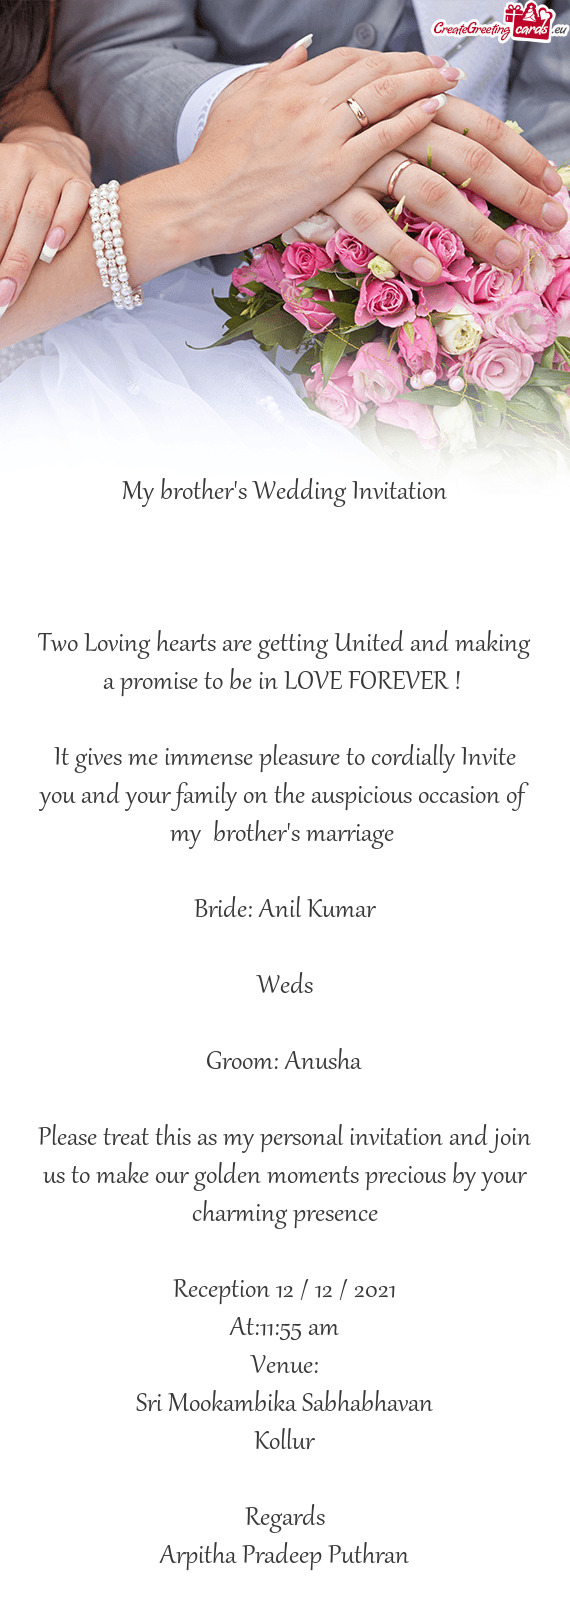 Bride: Anil Kumar